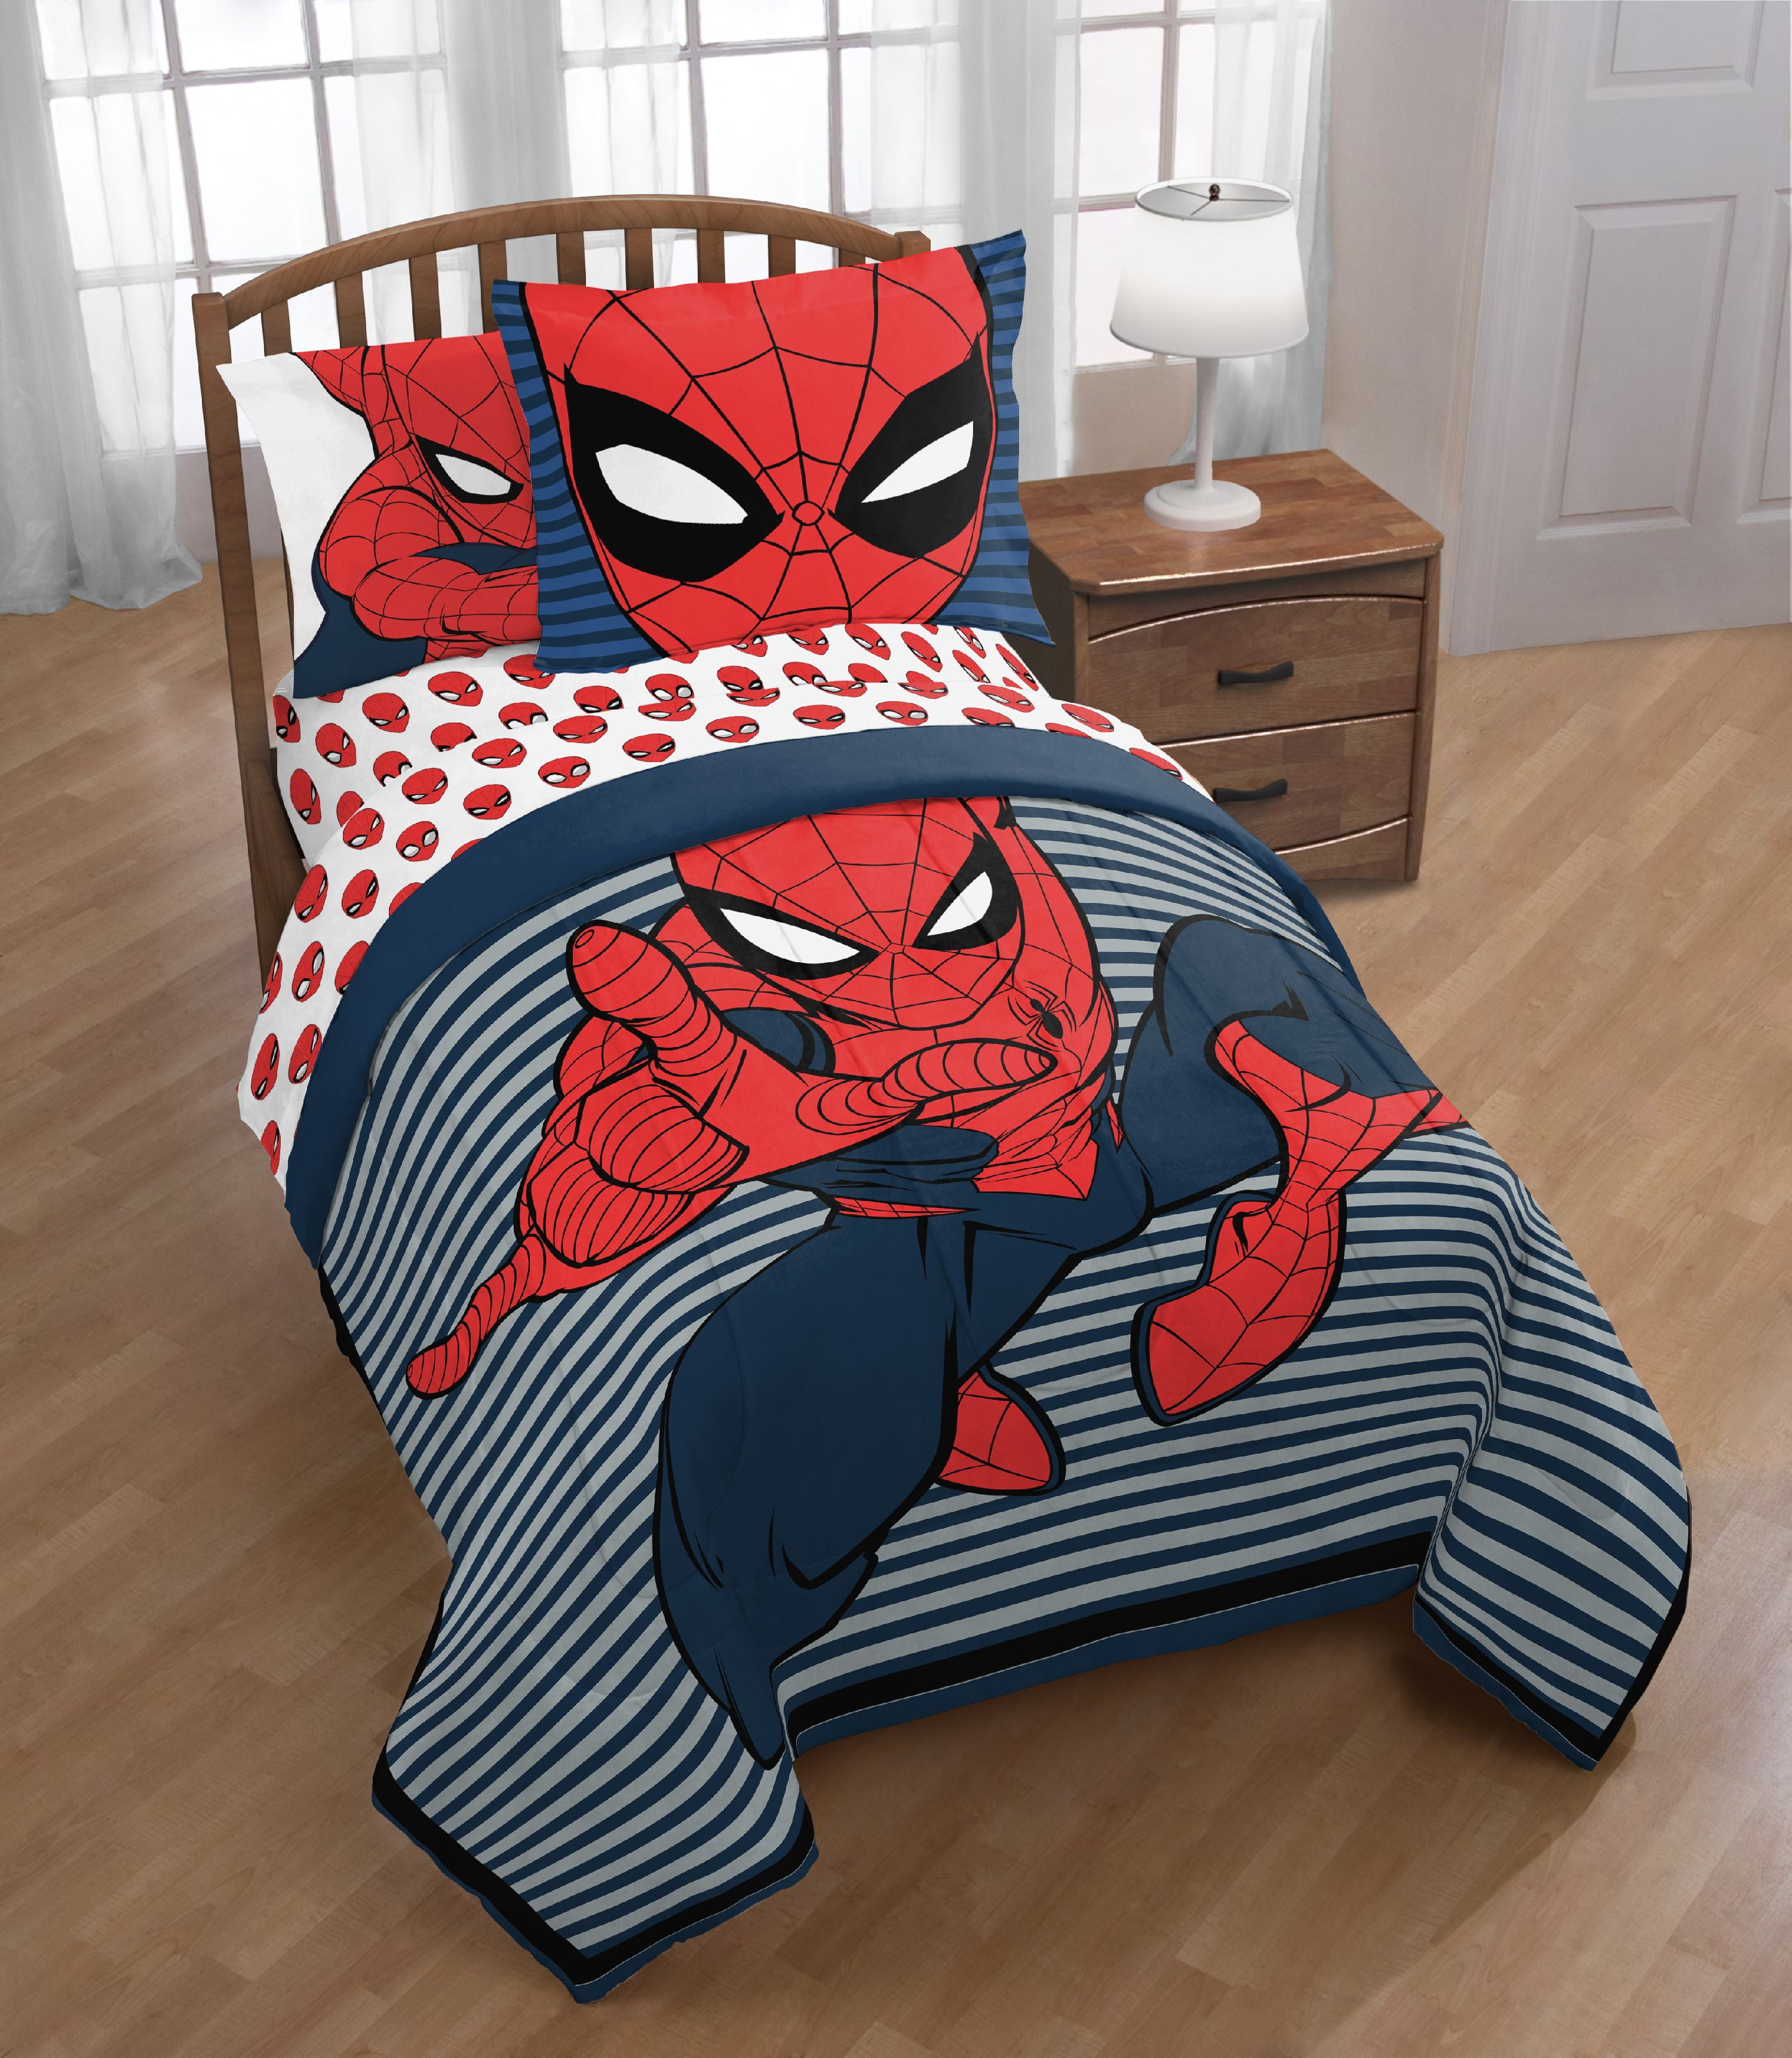 Spider Man Spiderman Boys Full Comforter Sheets amp Bonus SHAM 6 Piece Bed in A Bag Walmart com